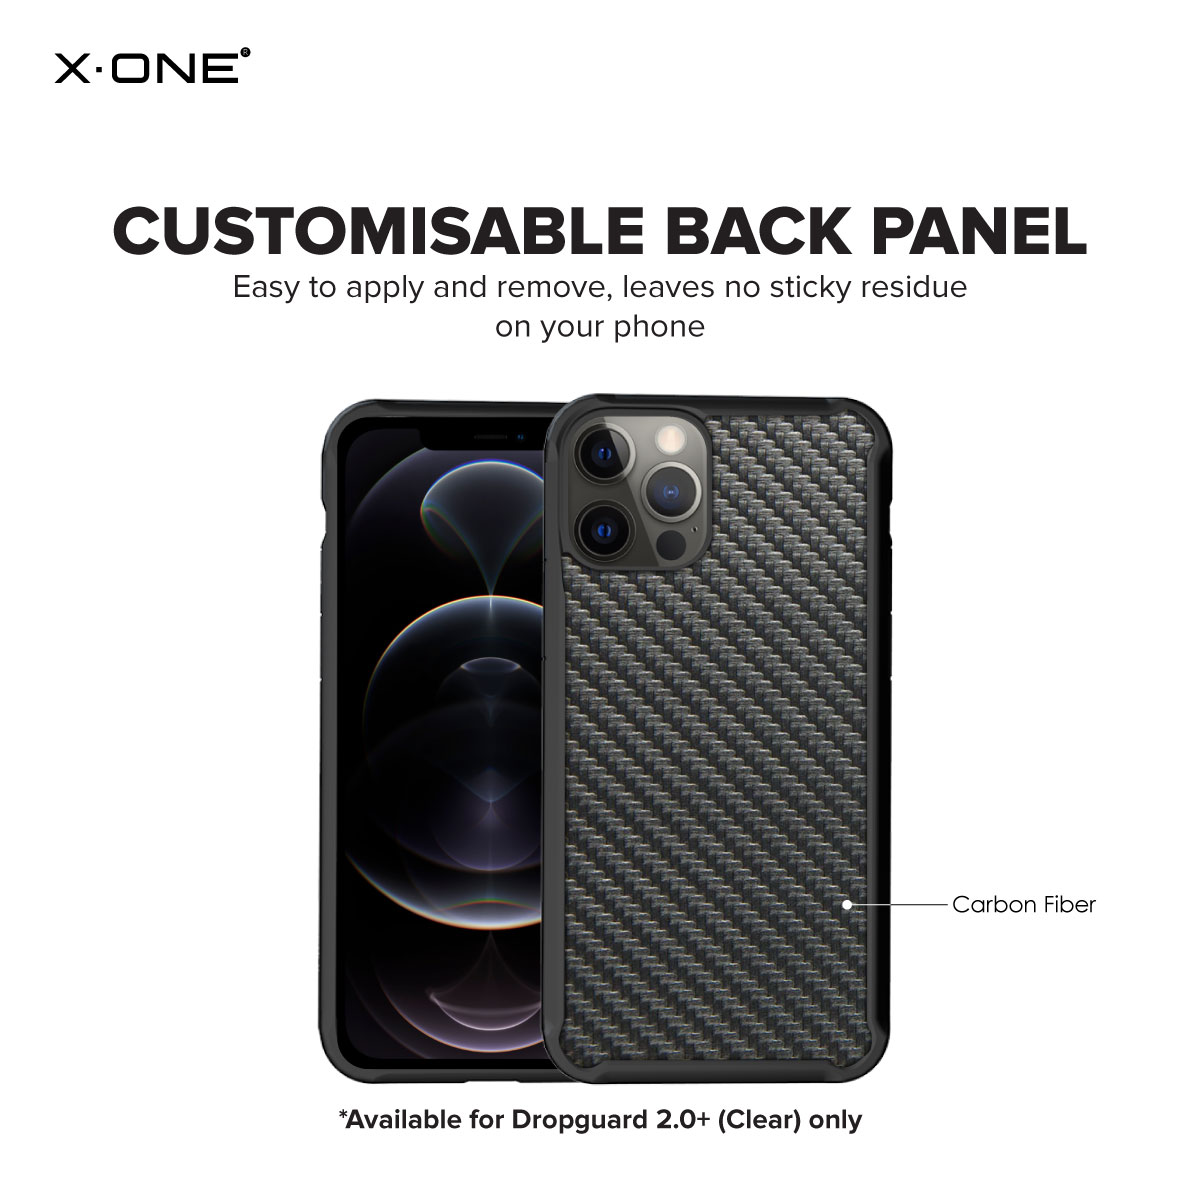 Customisable Back Panel